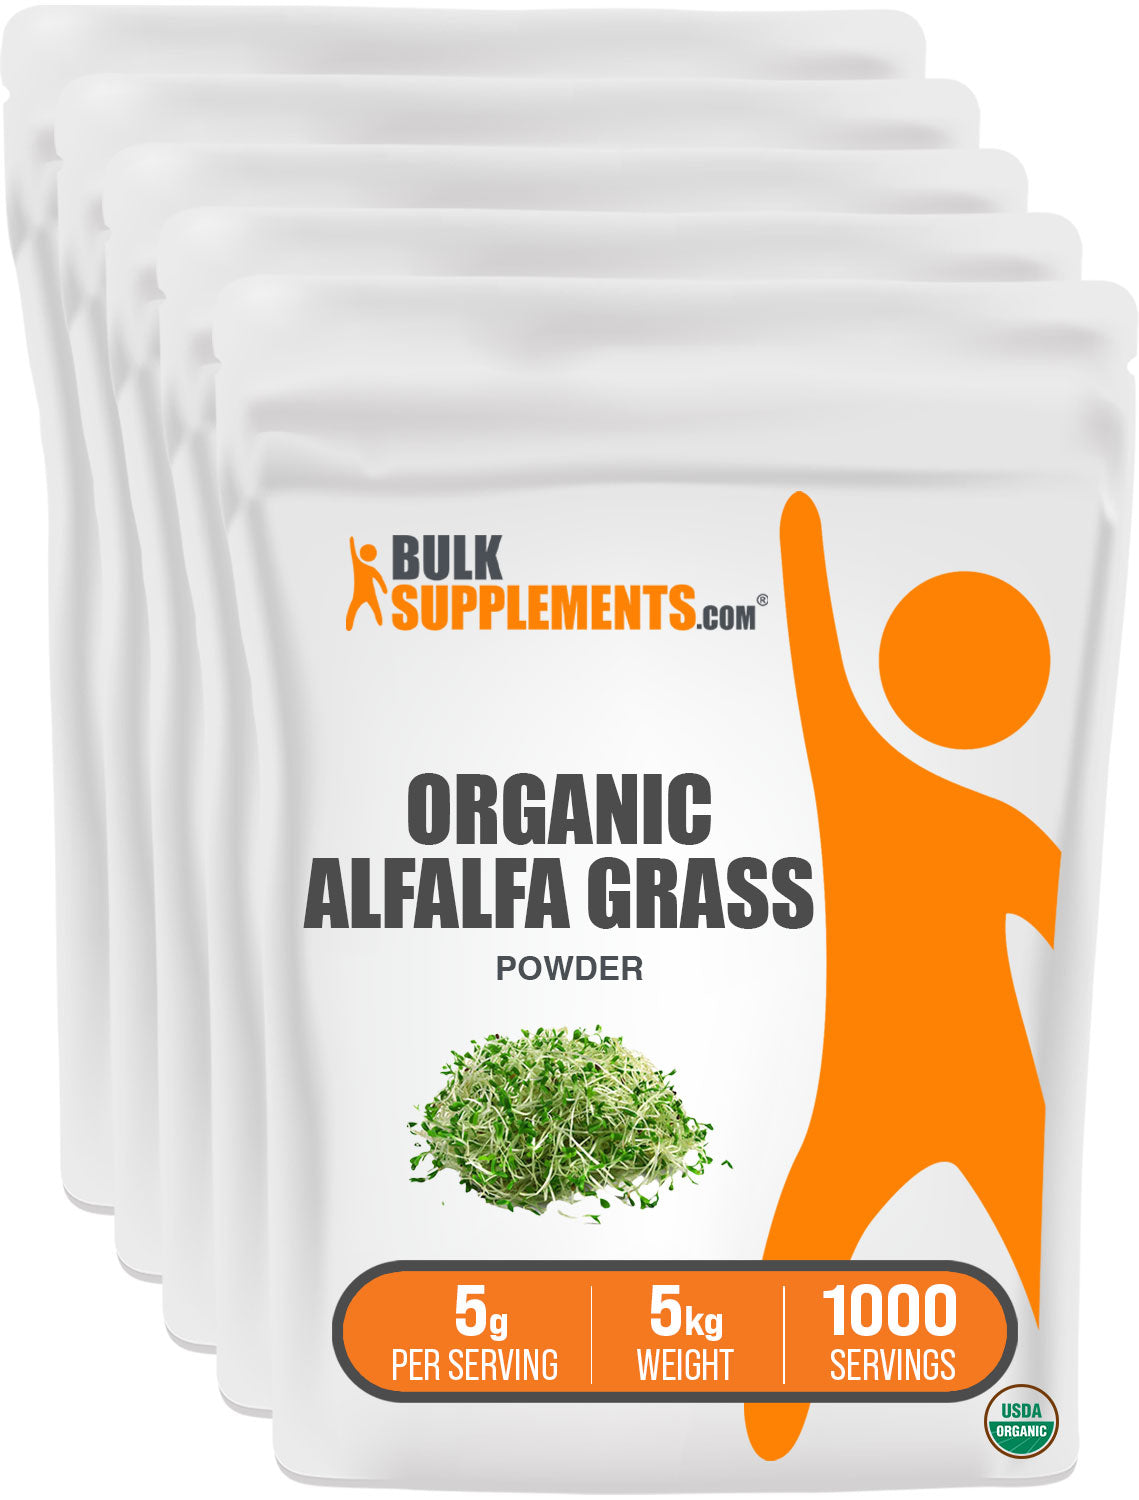 BulkSupplements.com Organic Alfalfa Grass Powder 5KG Bag